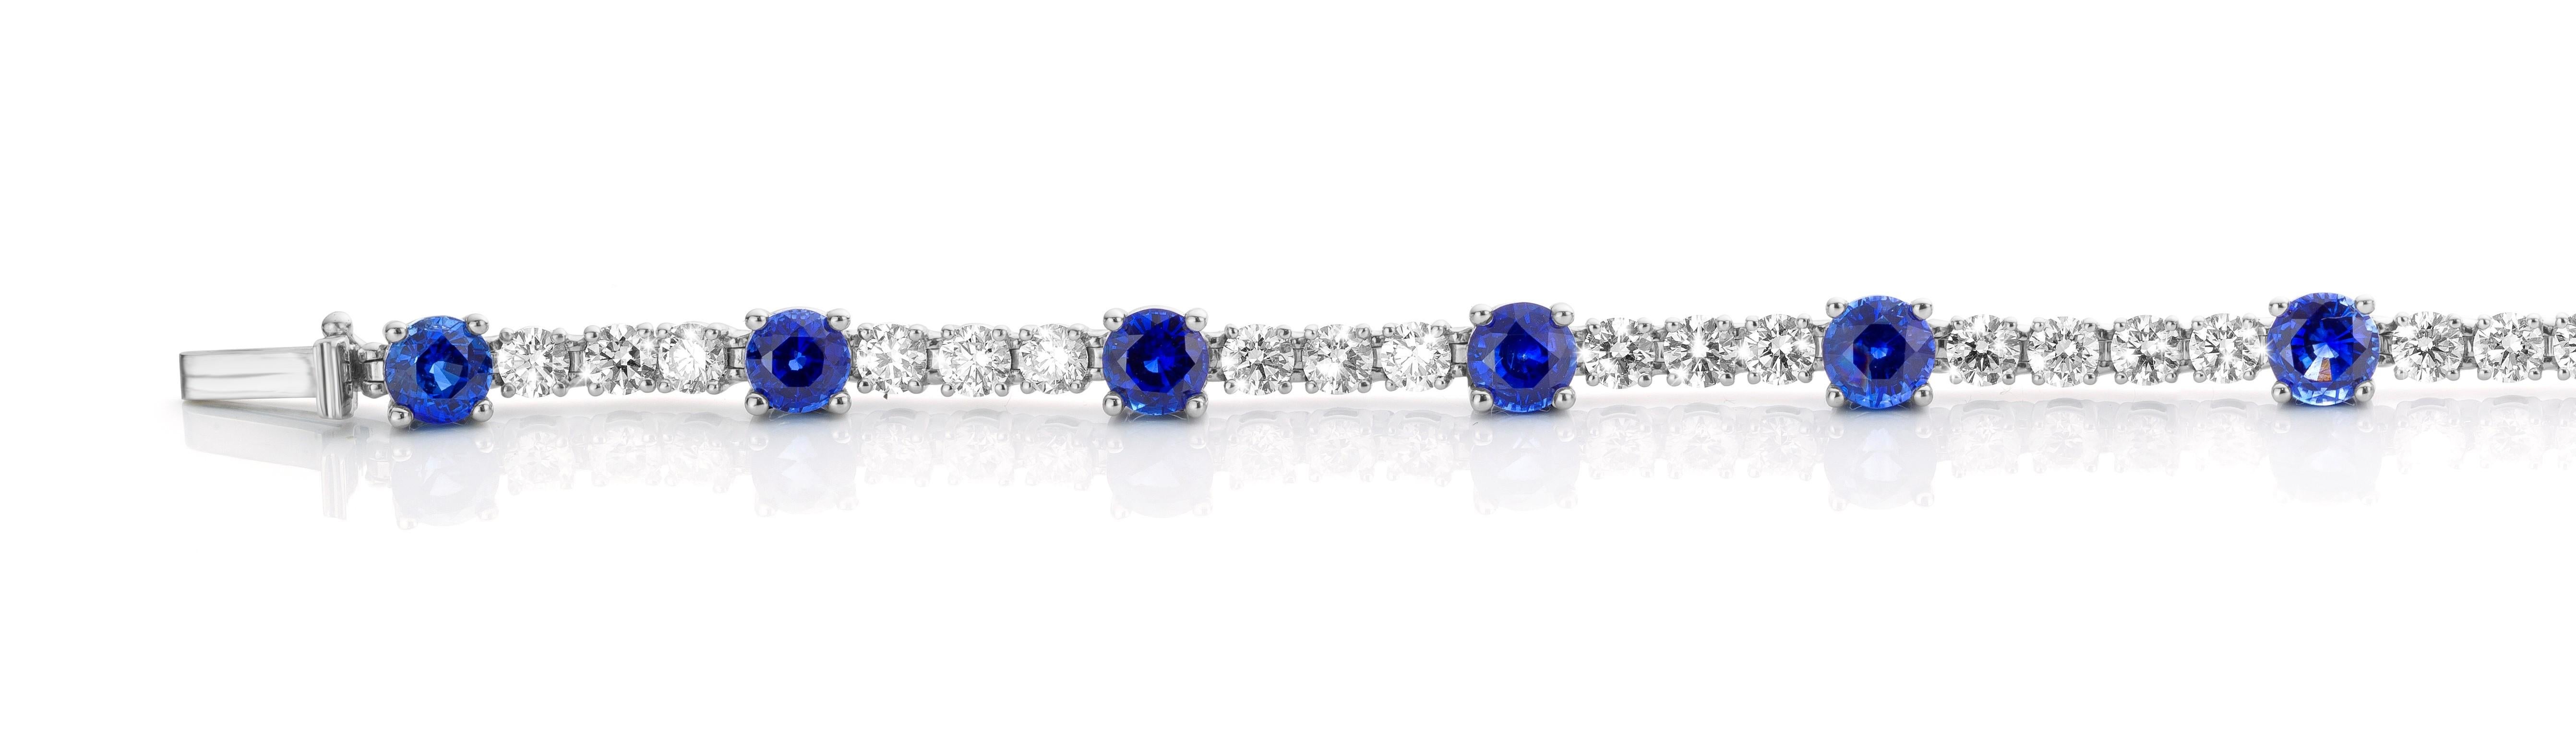 Brilliant Cut Cober “Royal” alliance set with 12 Sapphires and 36 Diamonds White Gold Bracelet For Sale